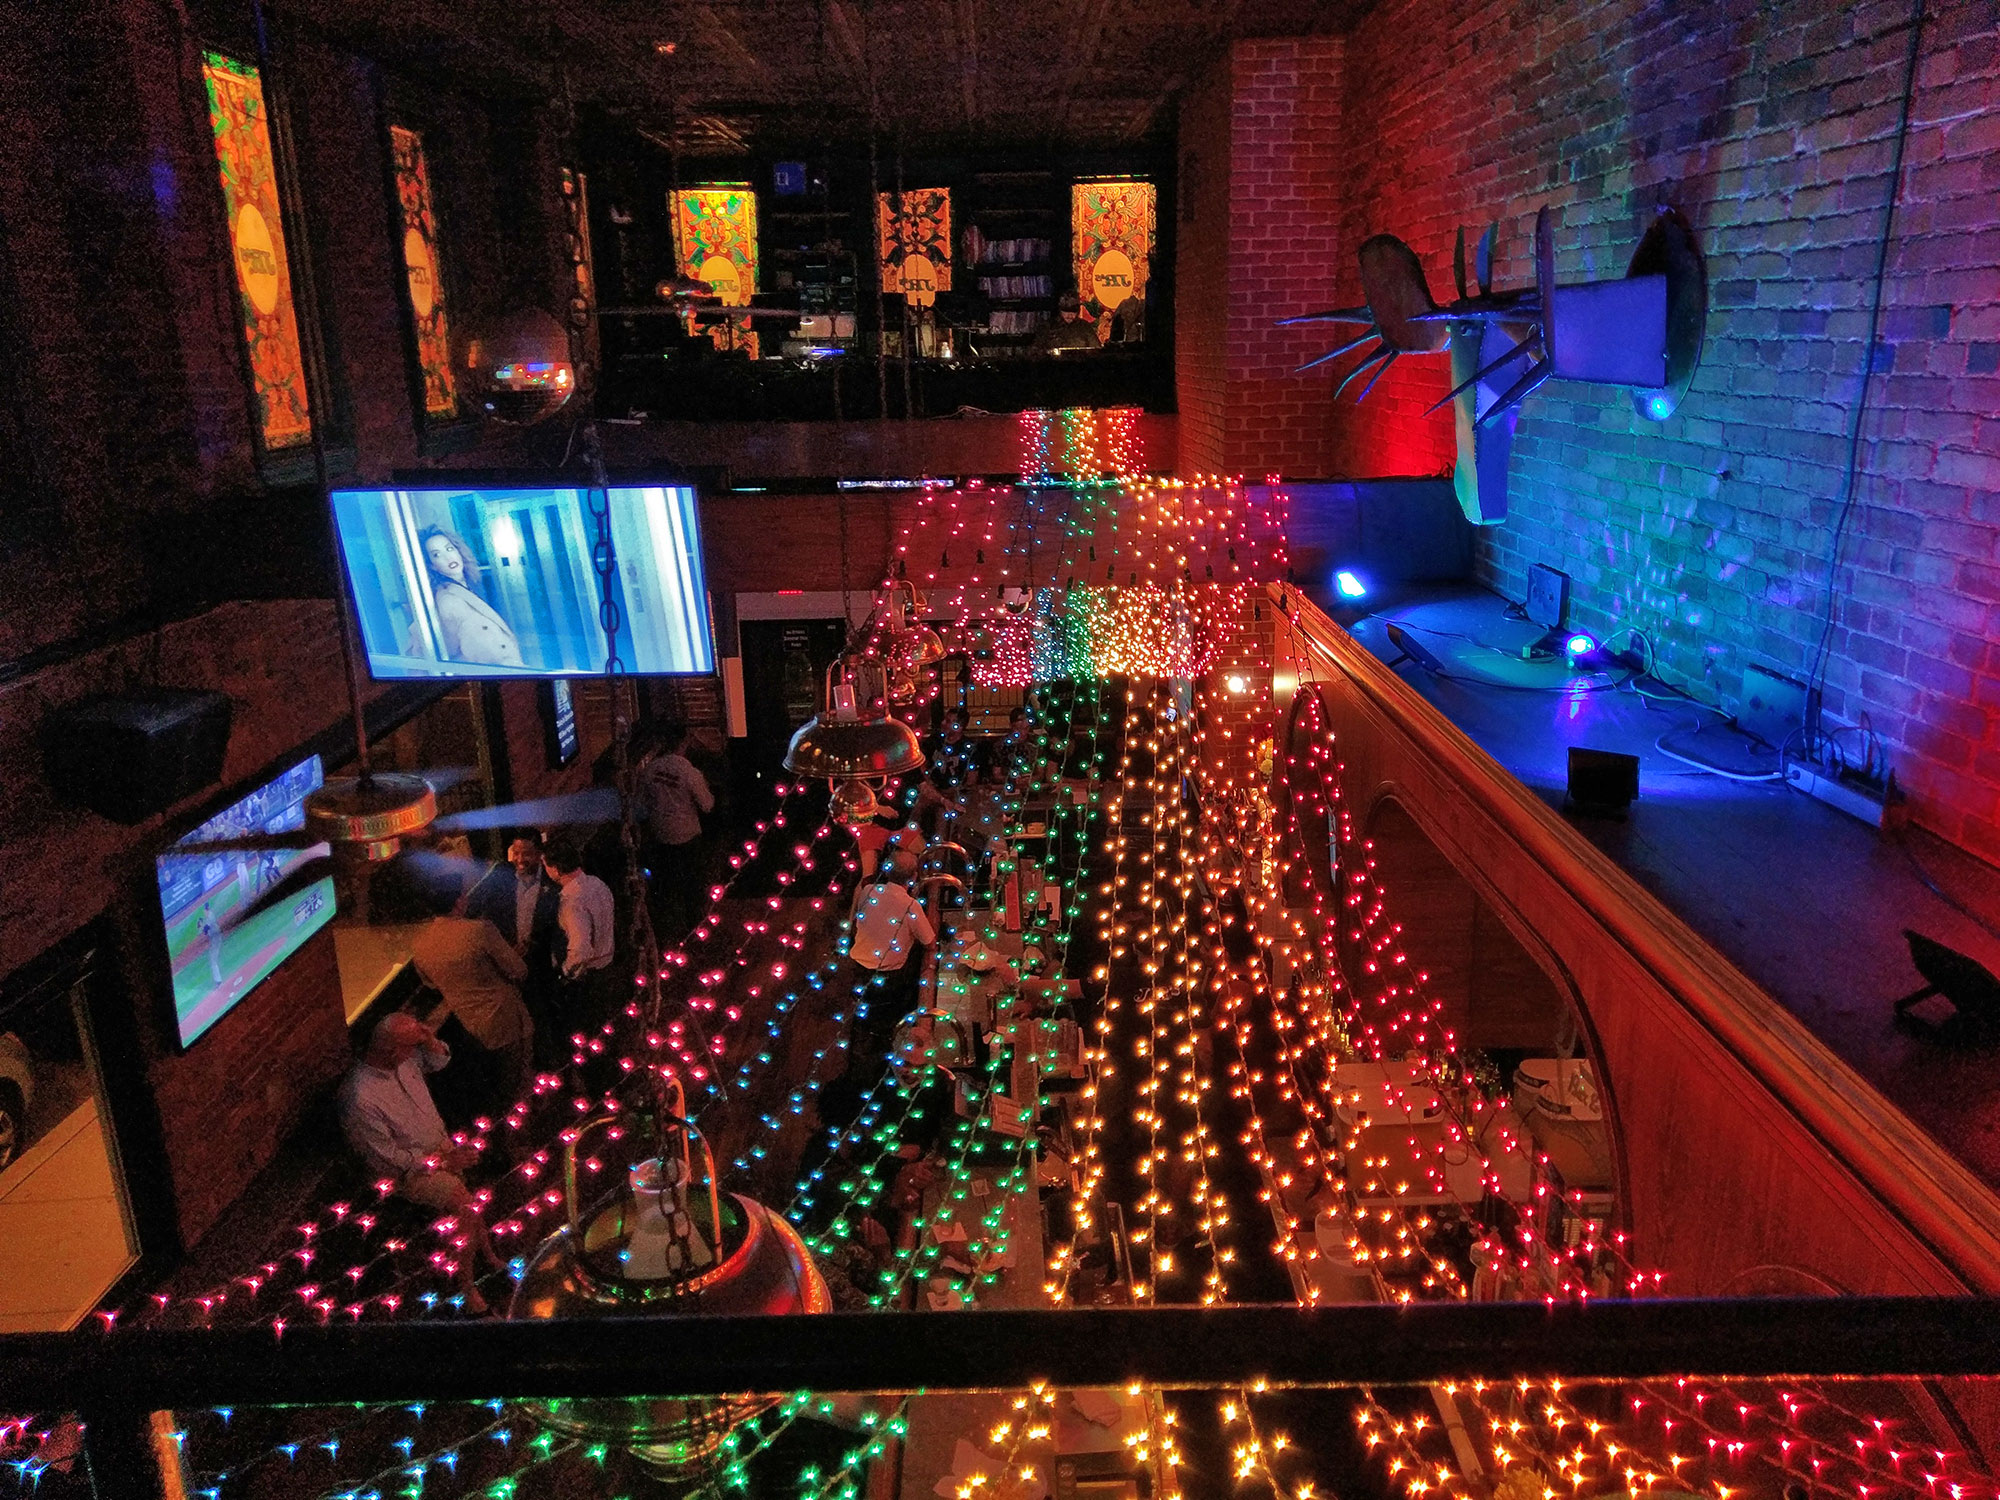 Rainbow lights in JR's Bar in Washington D.C.